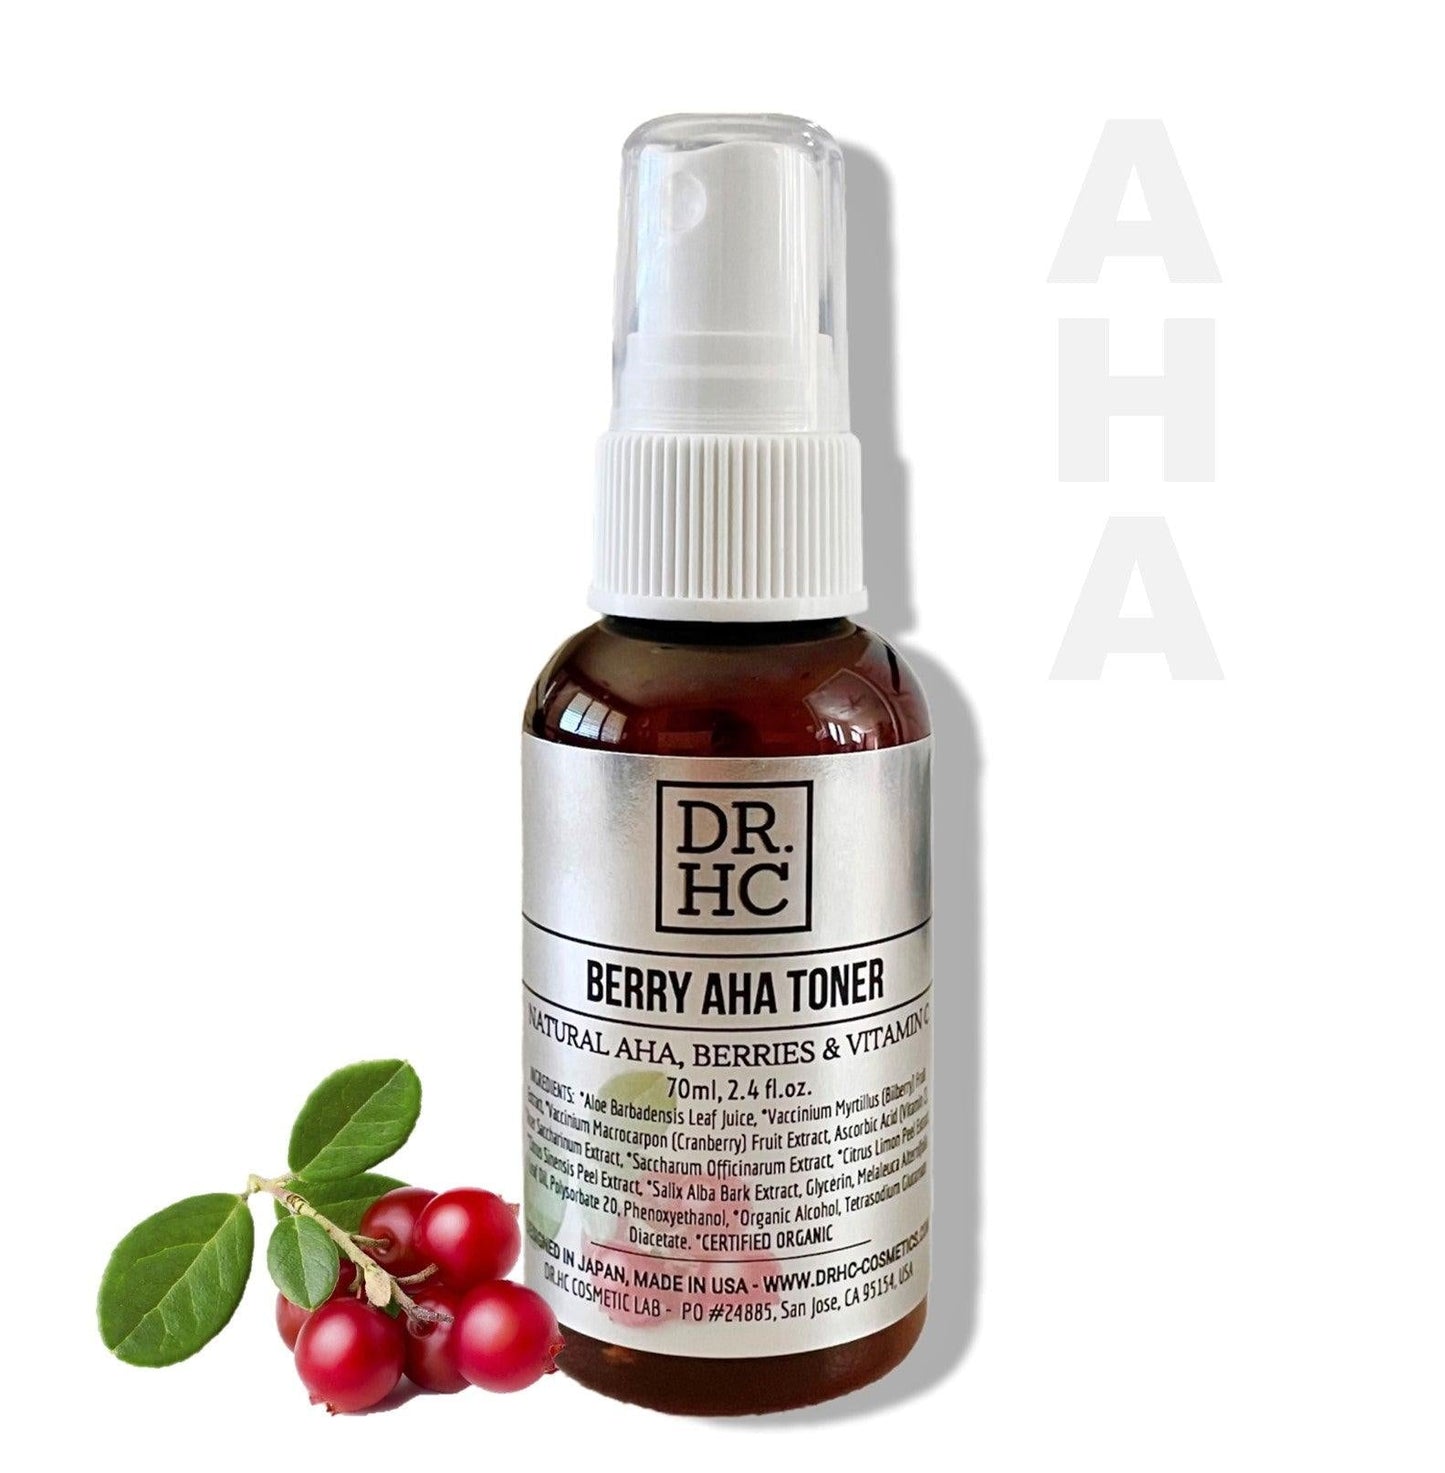 DR.HC Berry AHA Toner (70ml, 2.4 fl.oz.) (Skin brightening, Anti-hypigmentation, Anti-aging, Pore shrinking...)